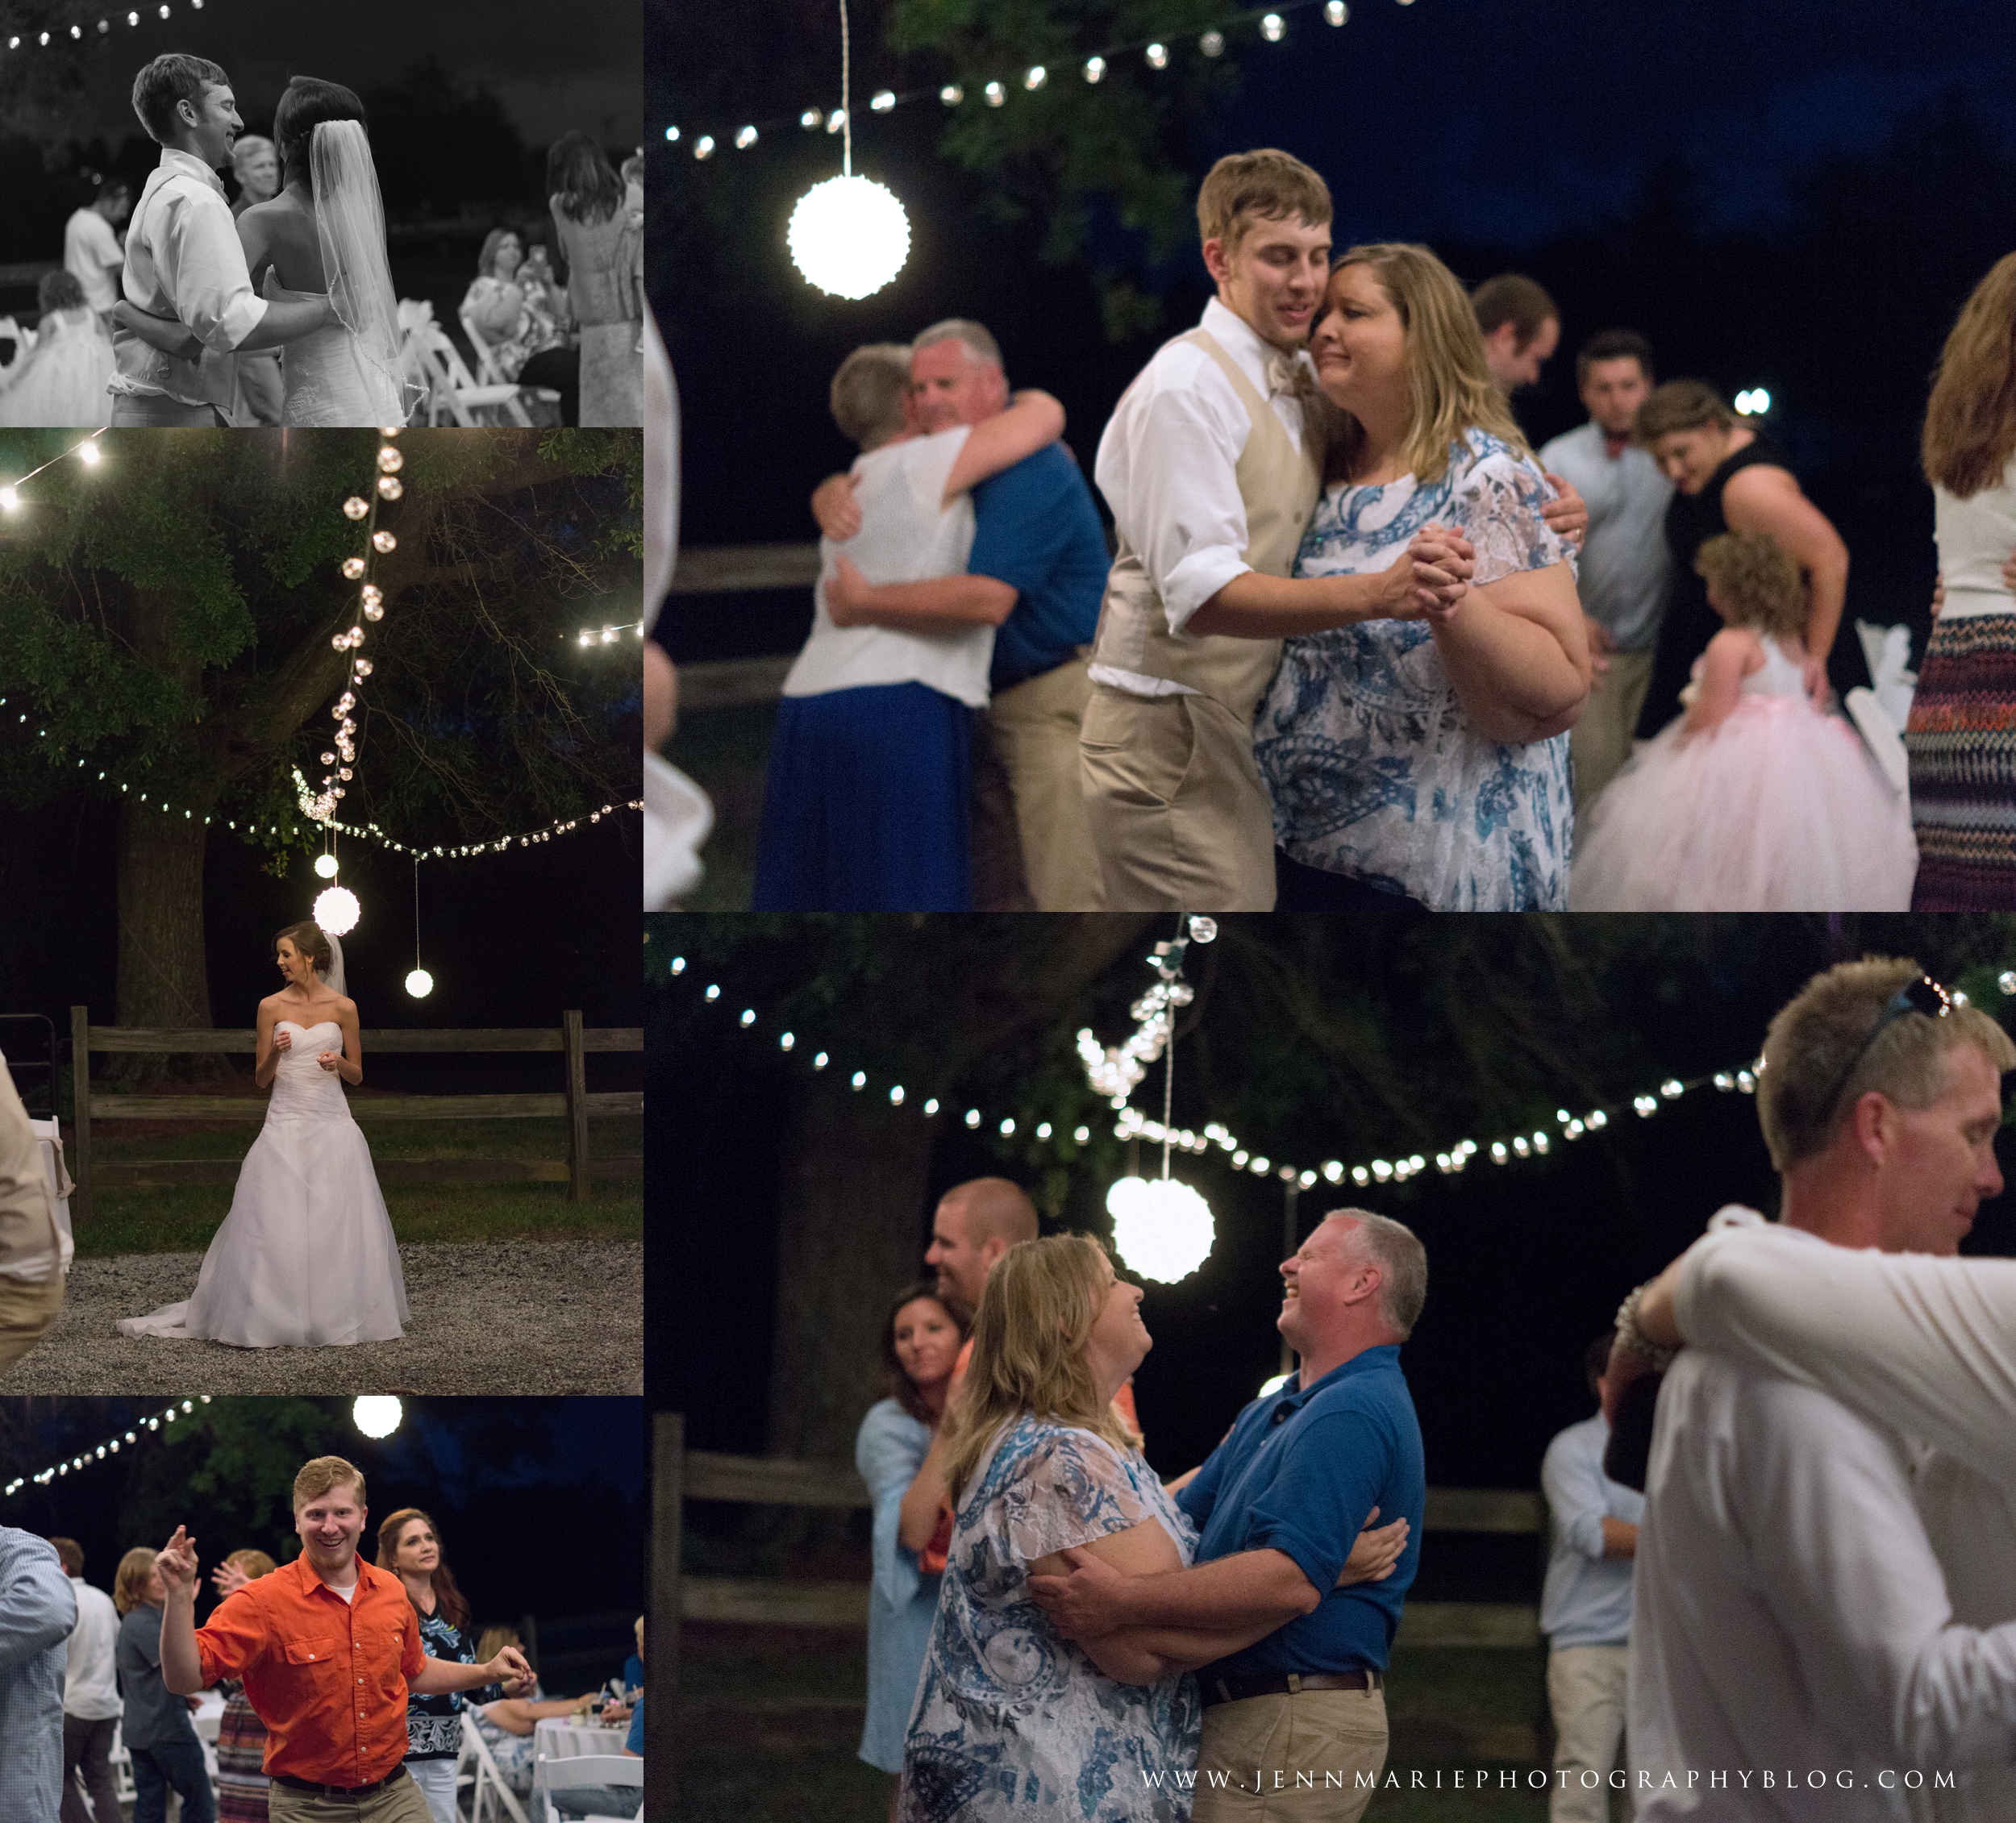 JennMarie Photography - South Carolina Portrait & Wedding Photography - Weddings